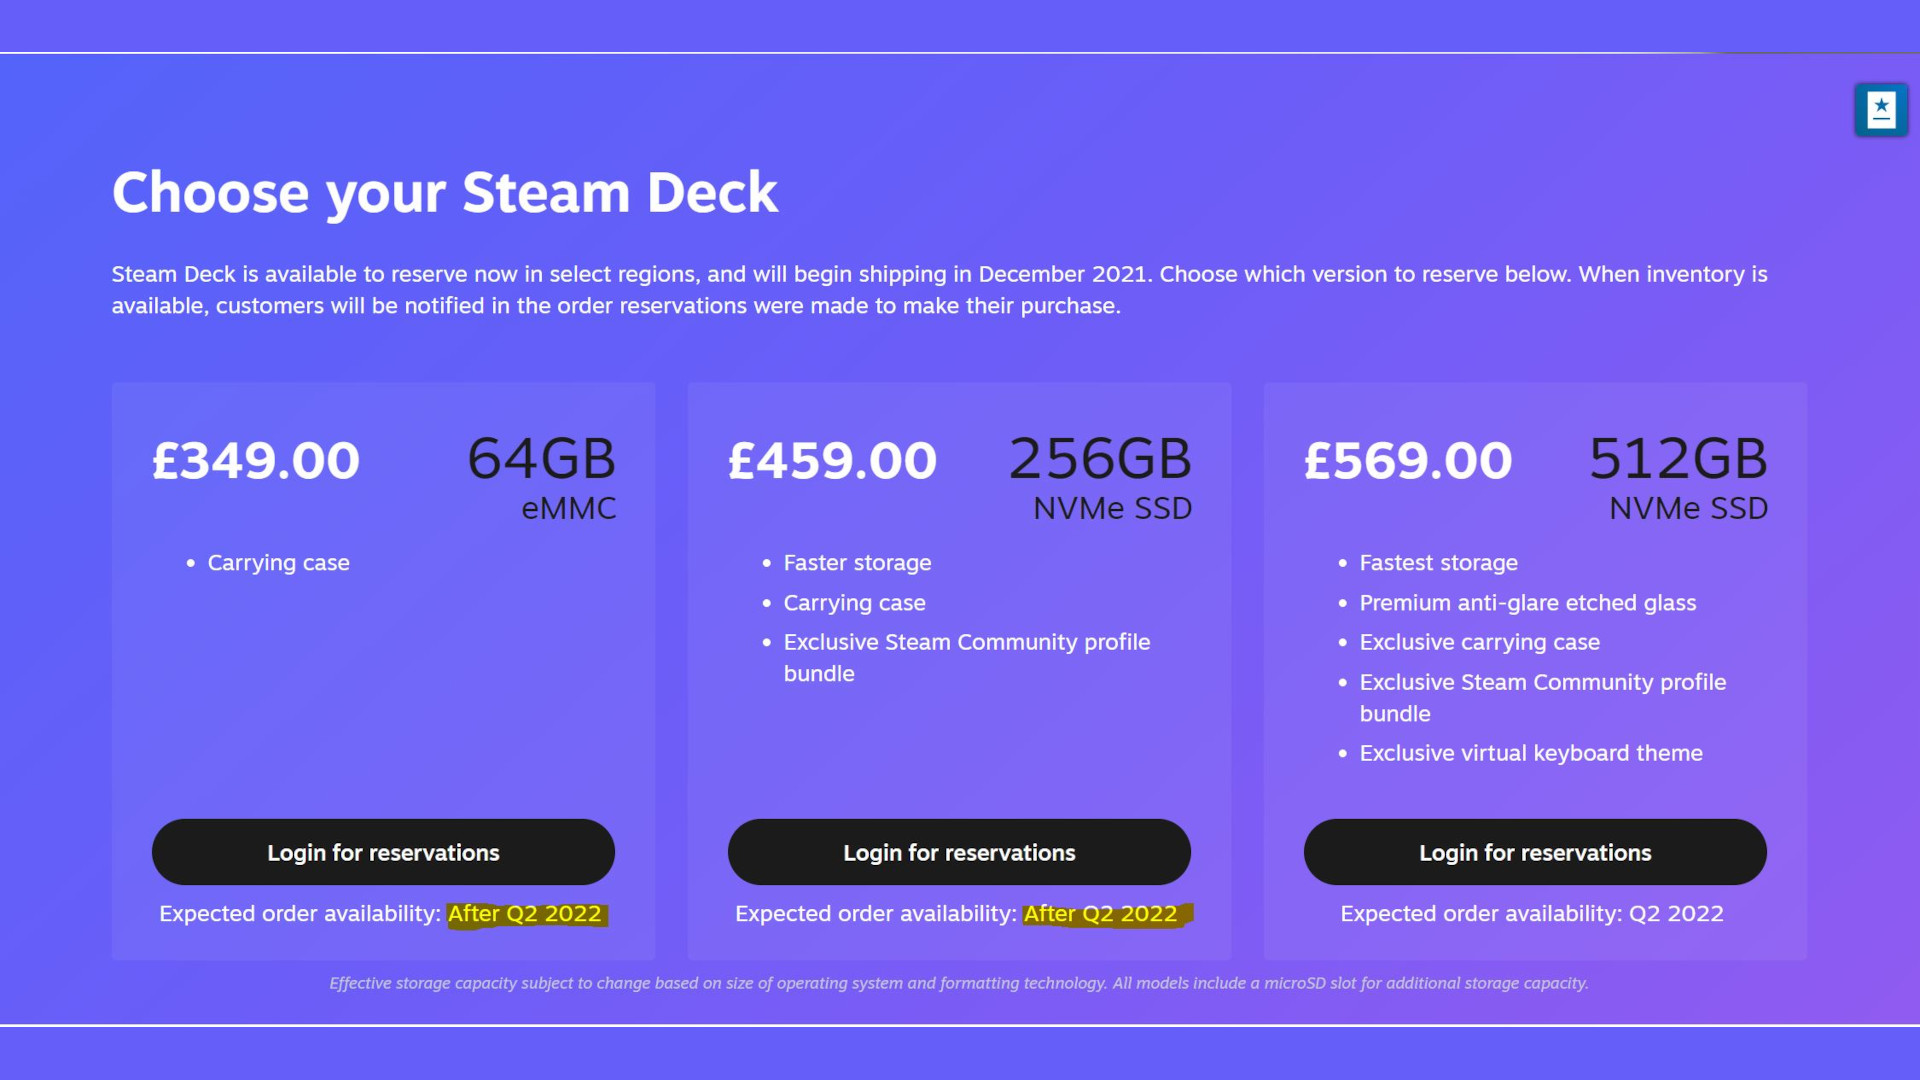 Steam Deck reservation section of website